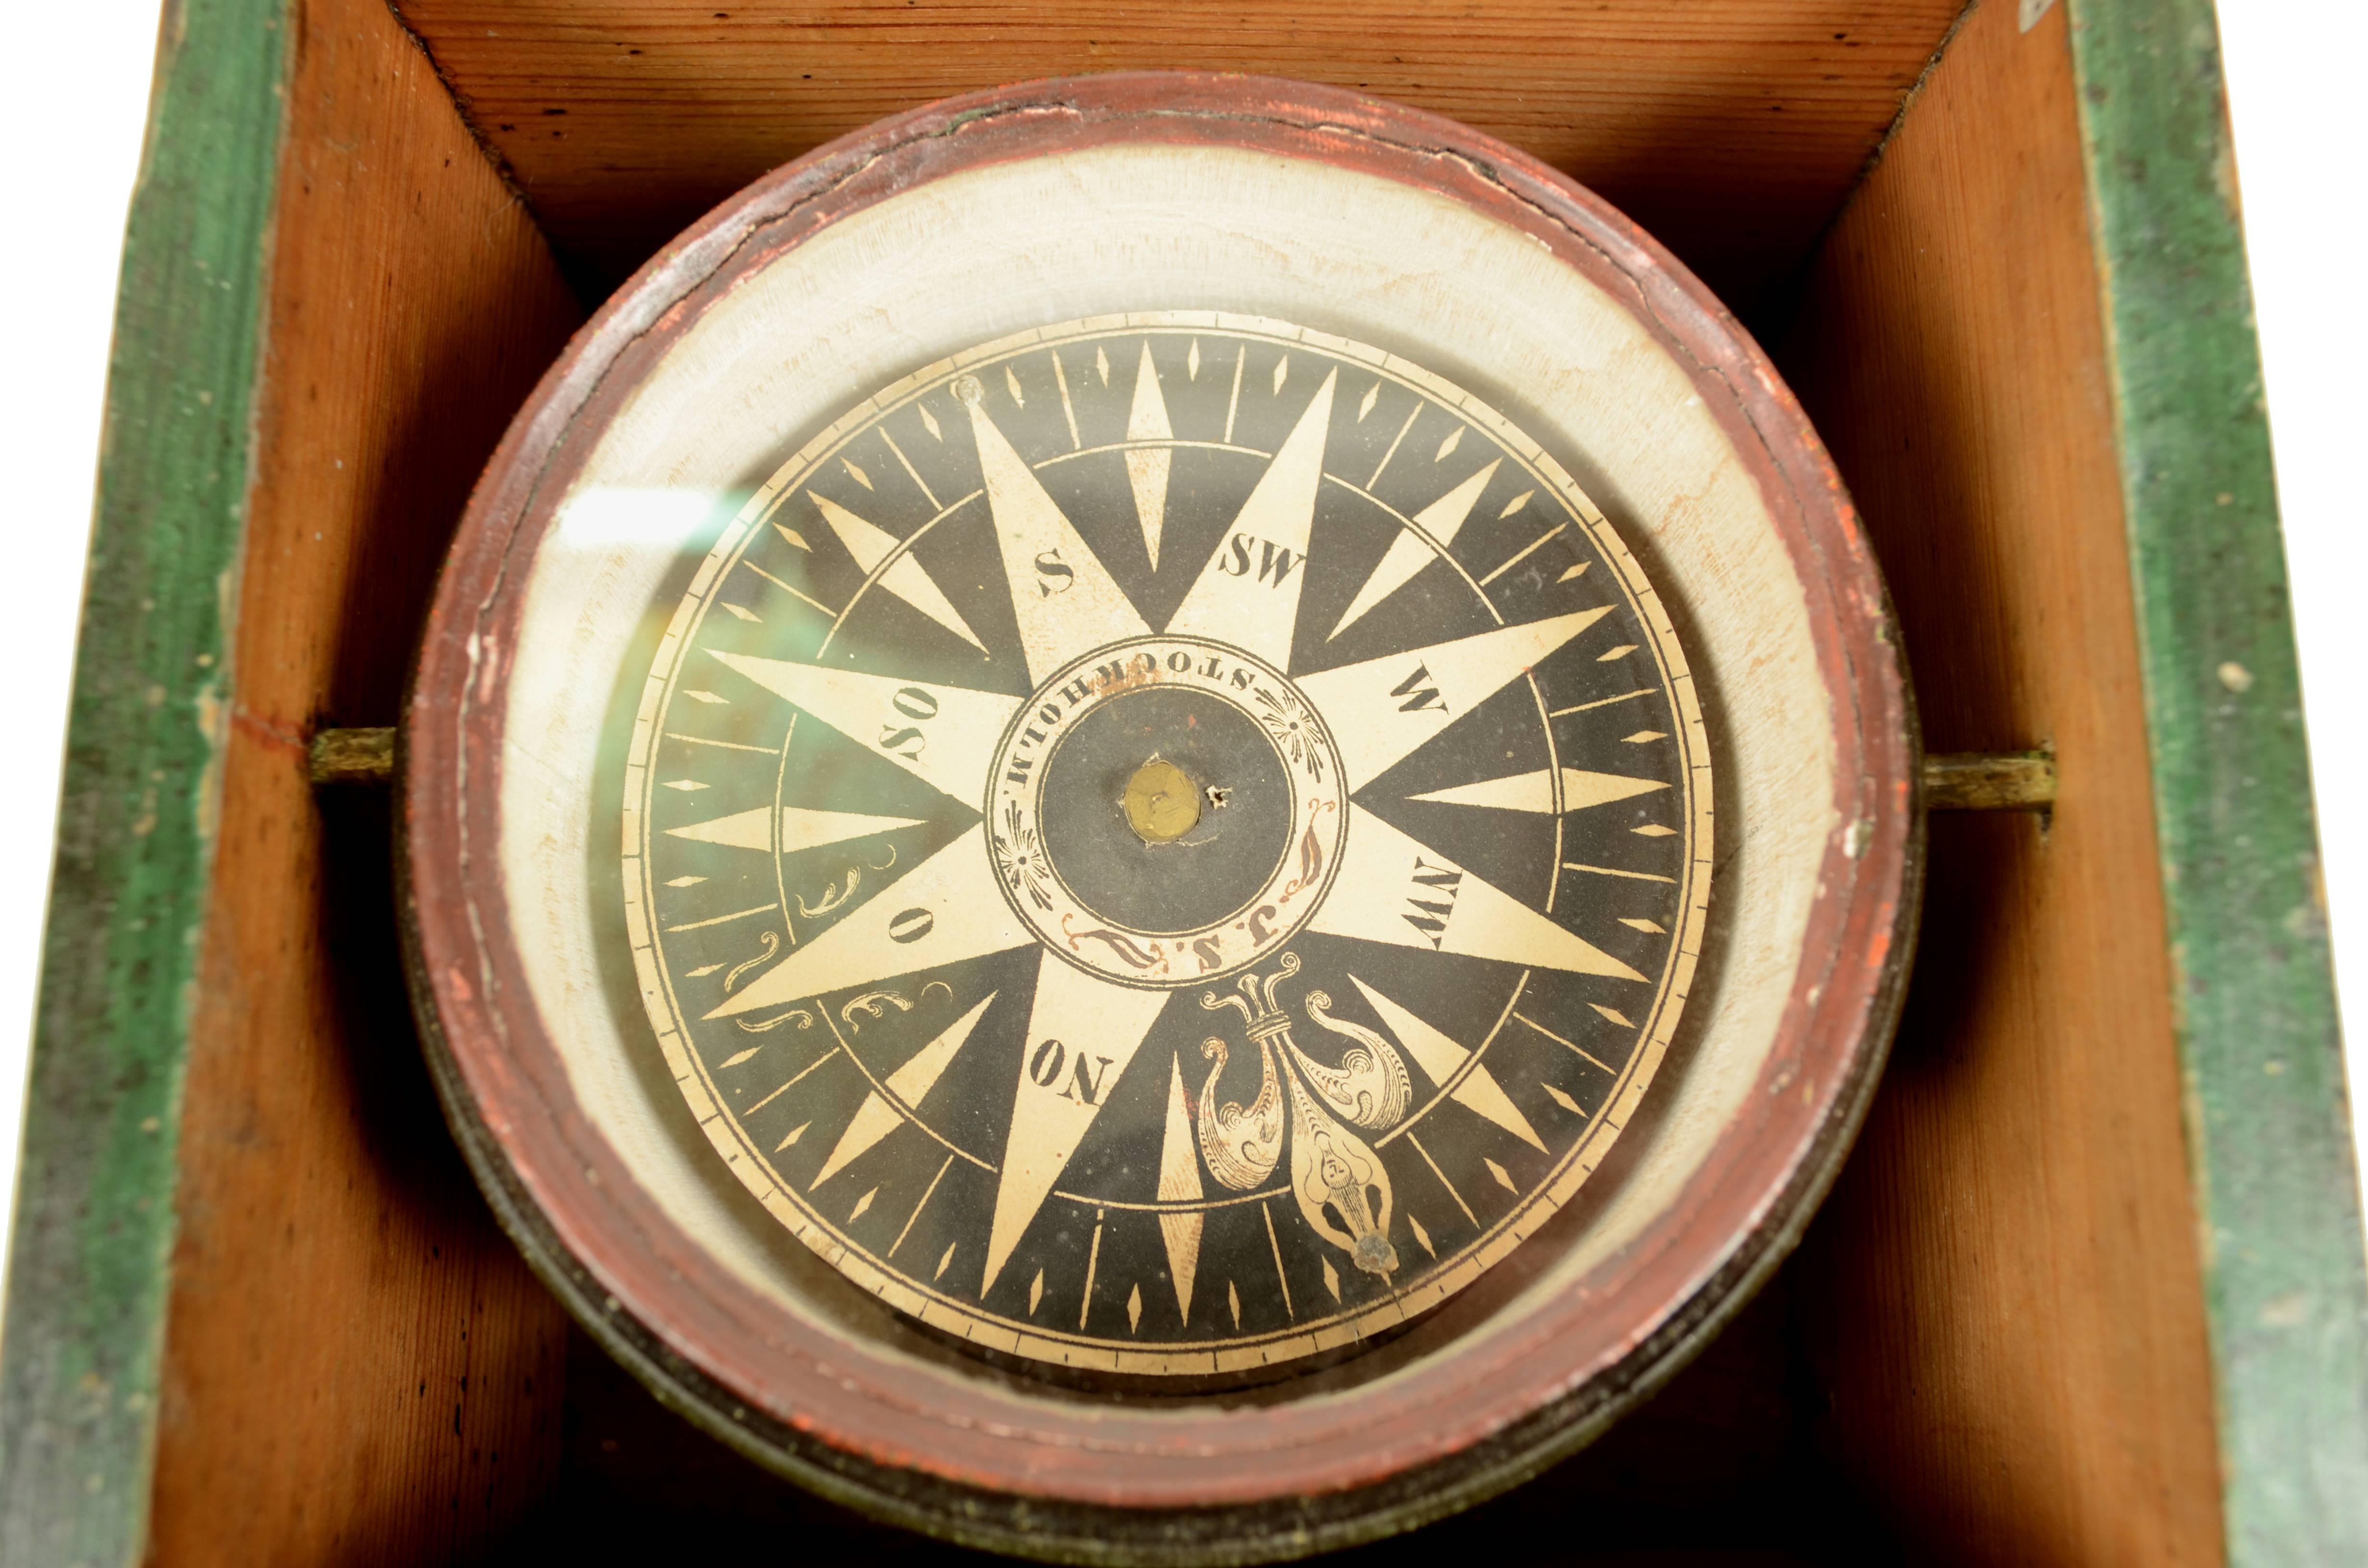 19th century compass